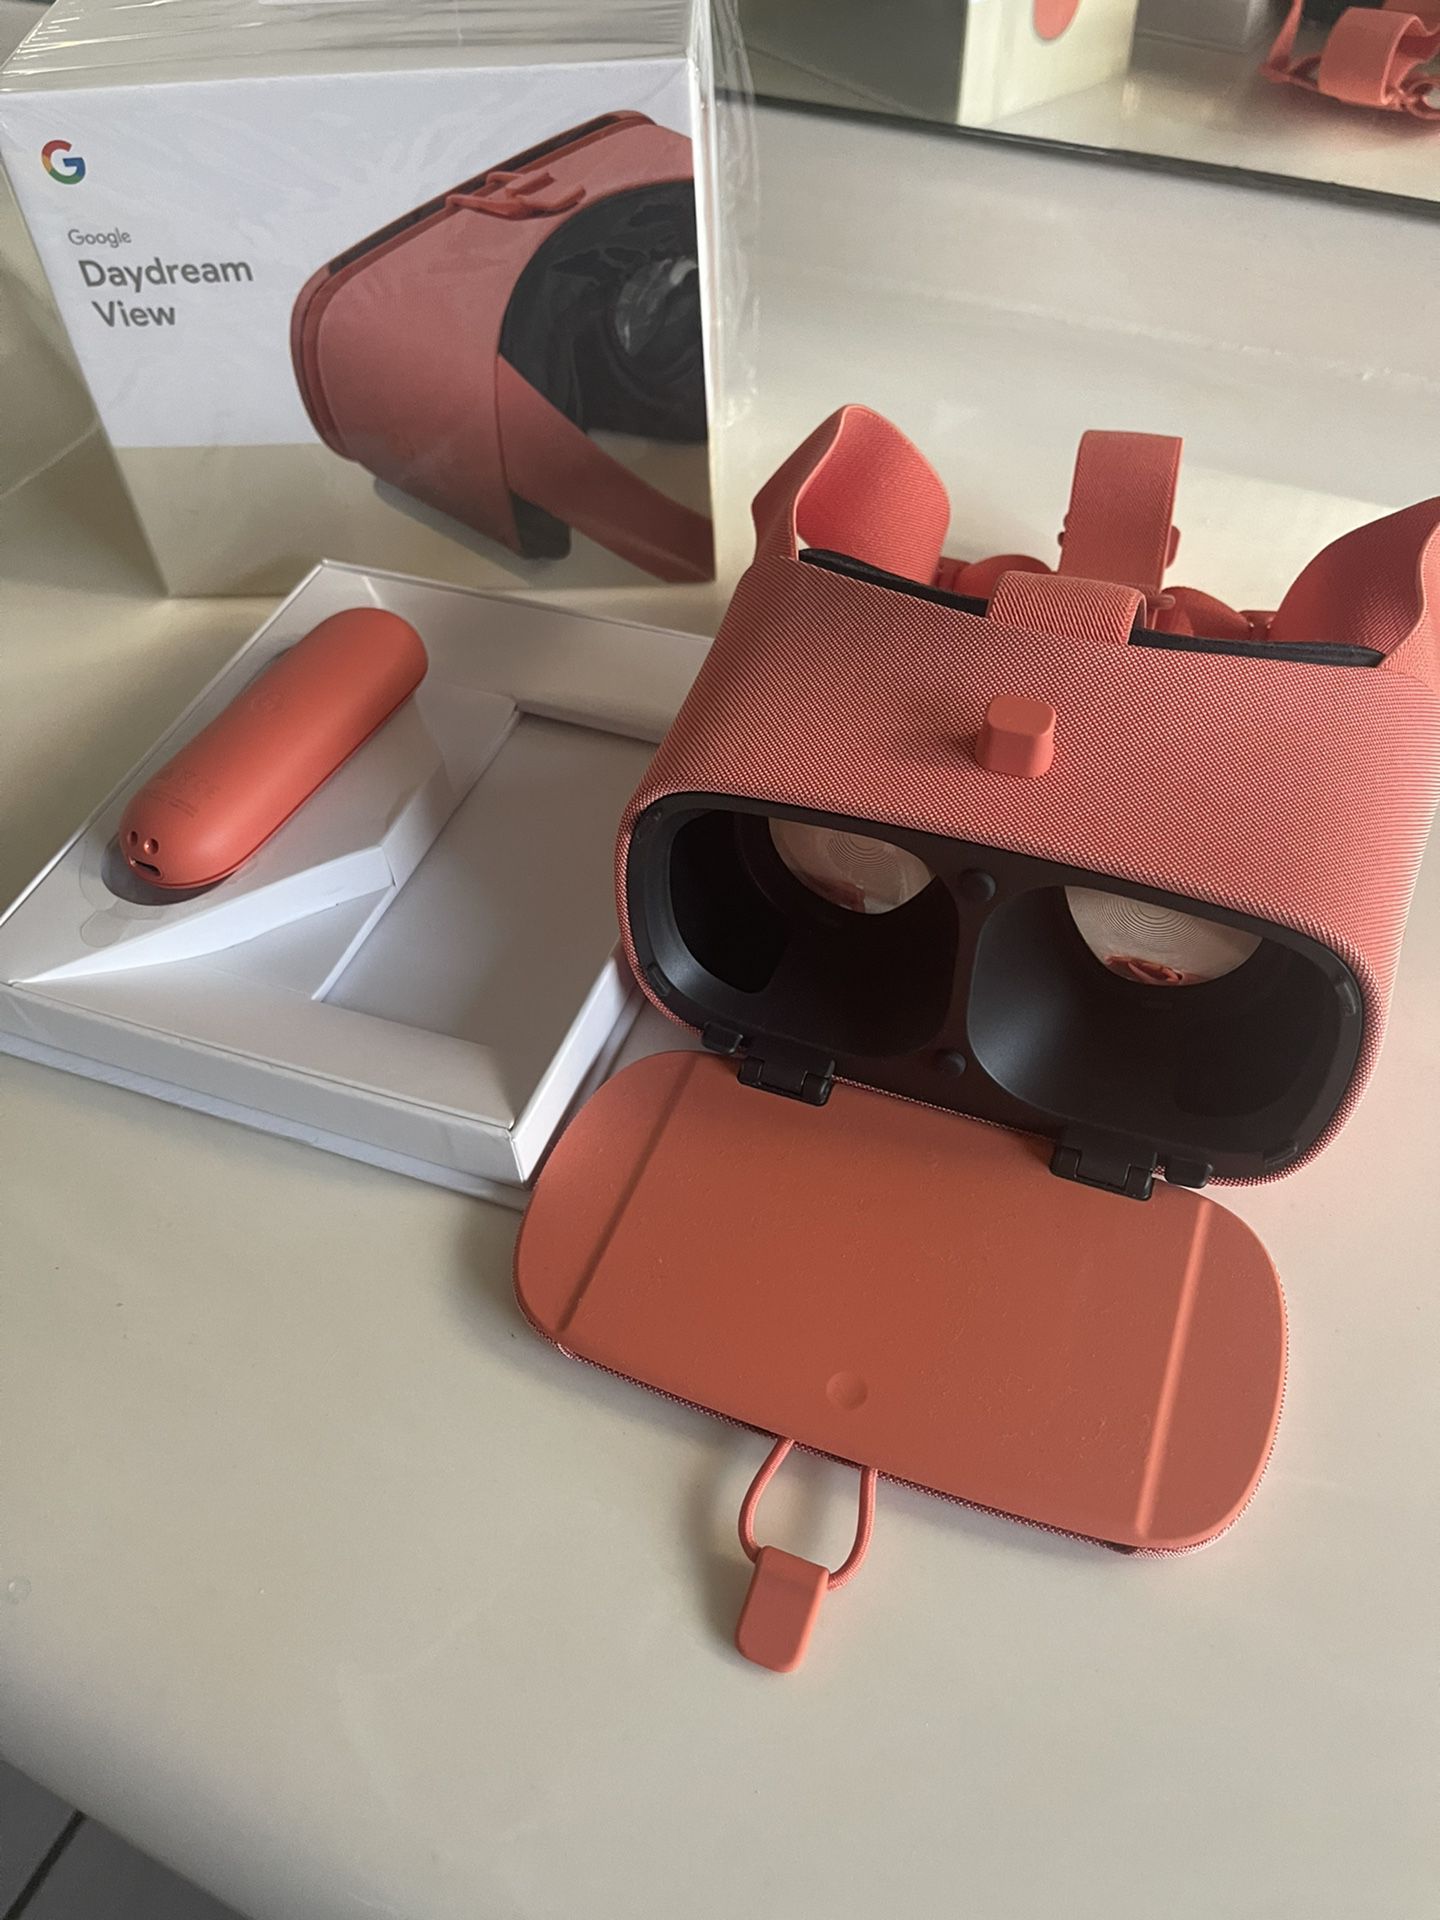 Google Daydream VR, Coral Color